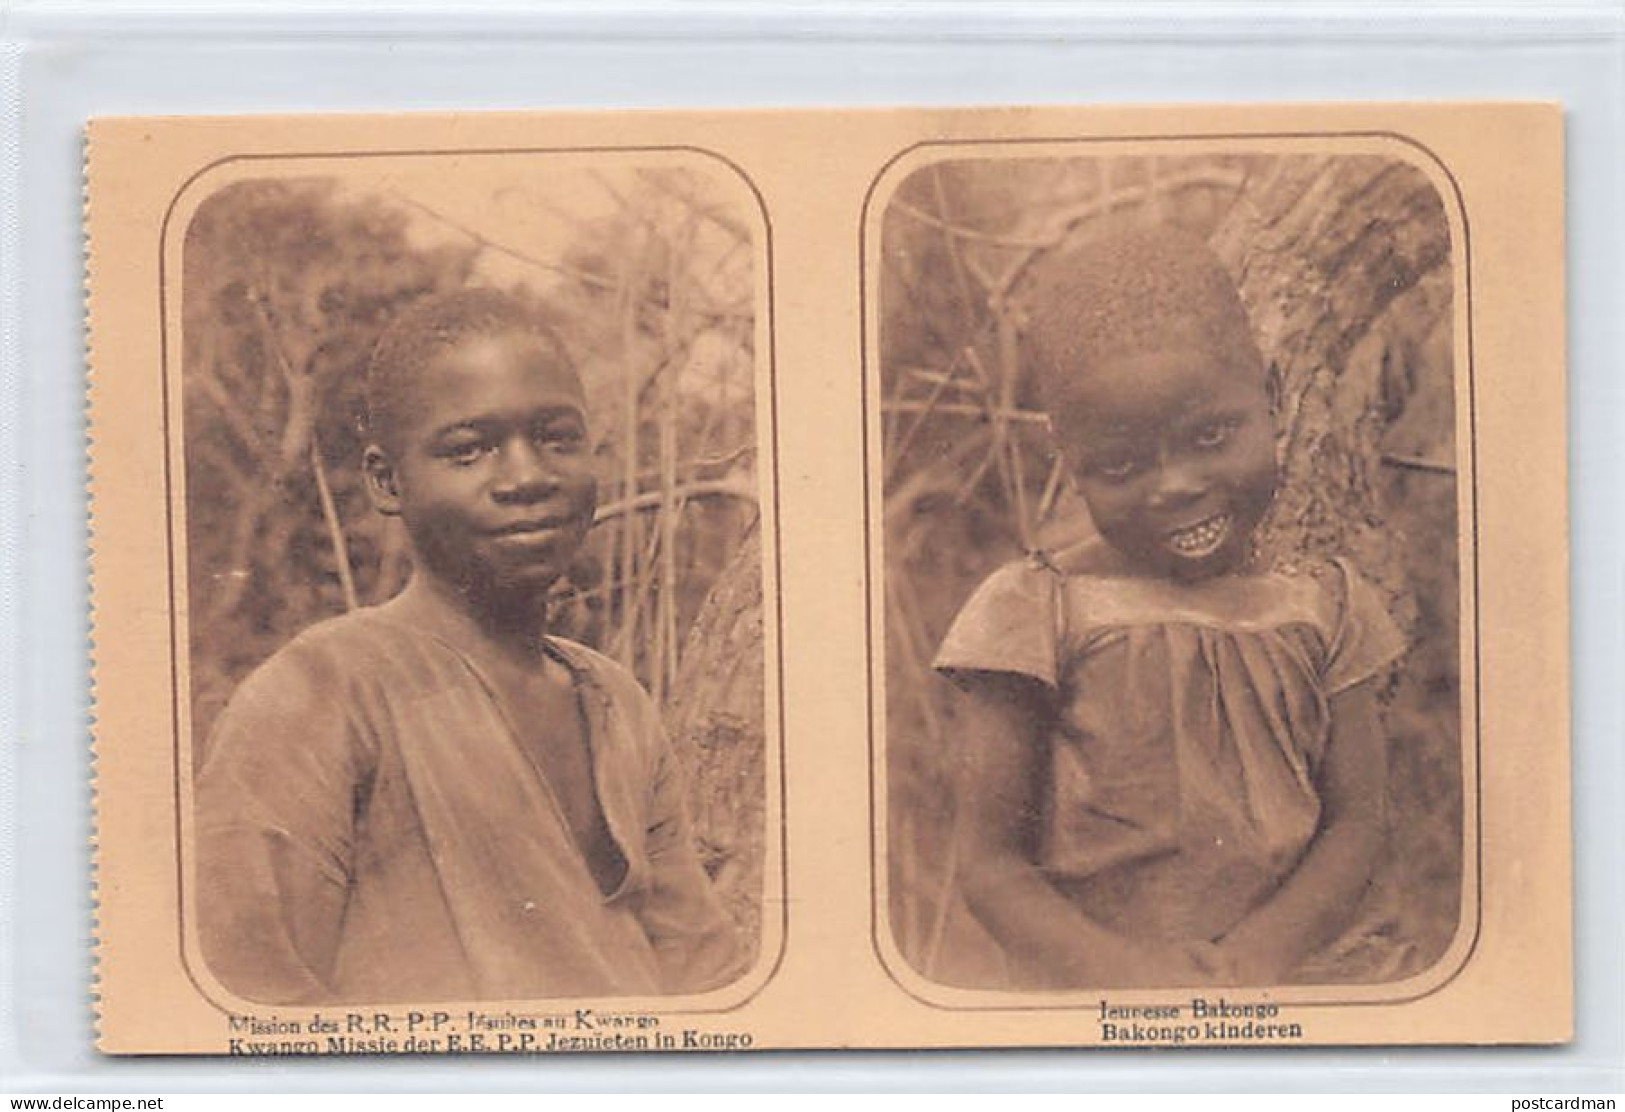 CONGO KINSHASA - Jeunesse Bakongo - Ed. Mission Des Jésuites Kwango  - Congo Belge